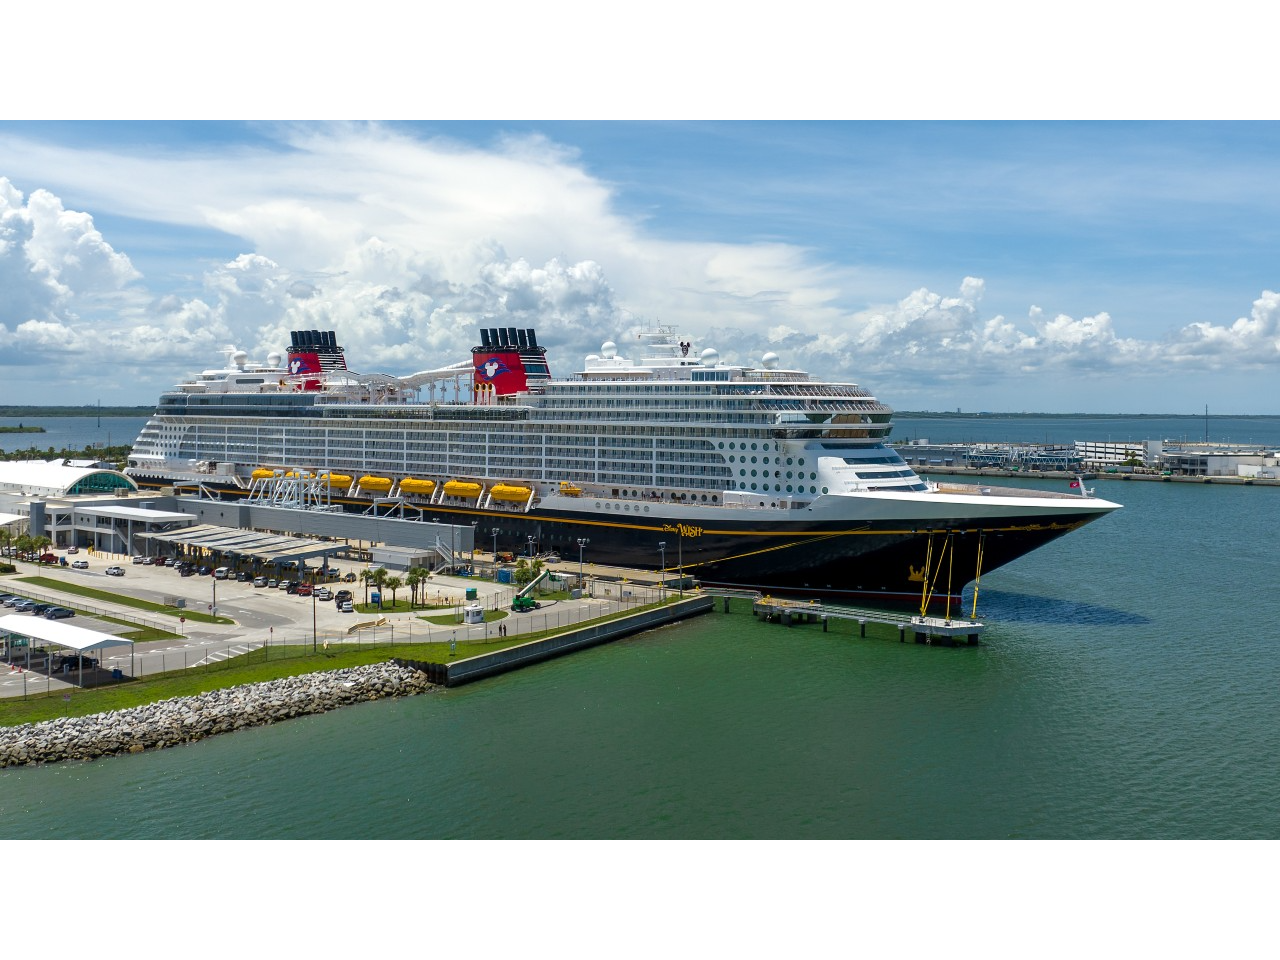 Cruise industry news Jun 2022: STC Med & Disney Wish